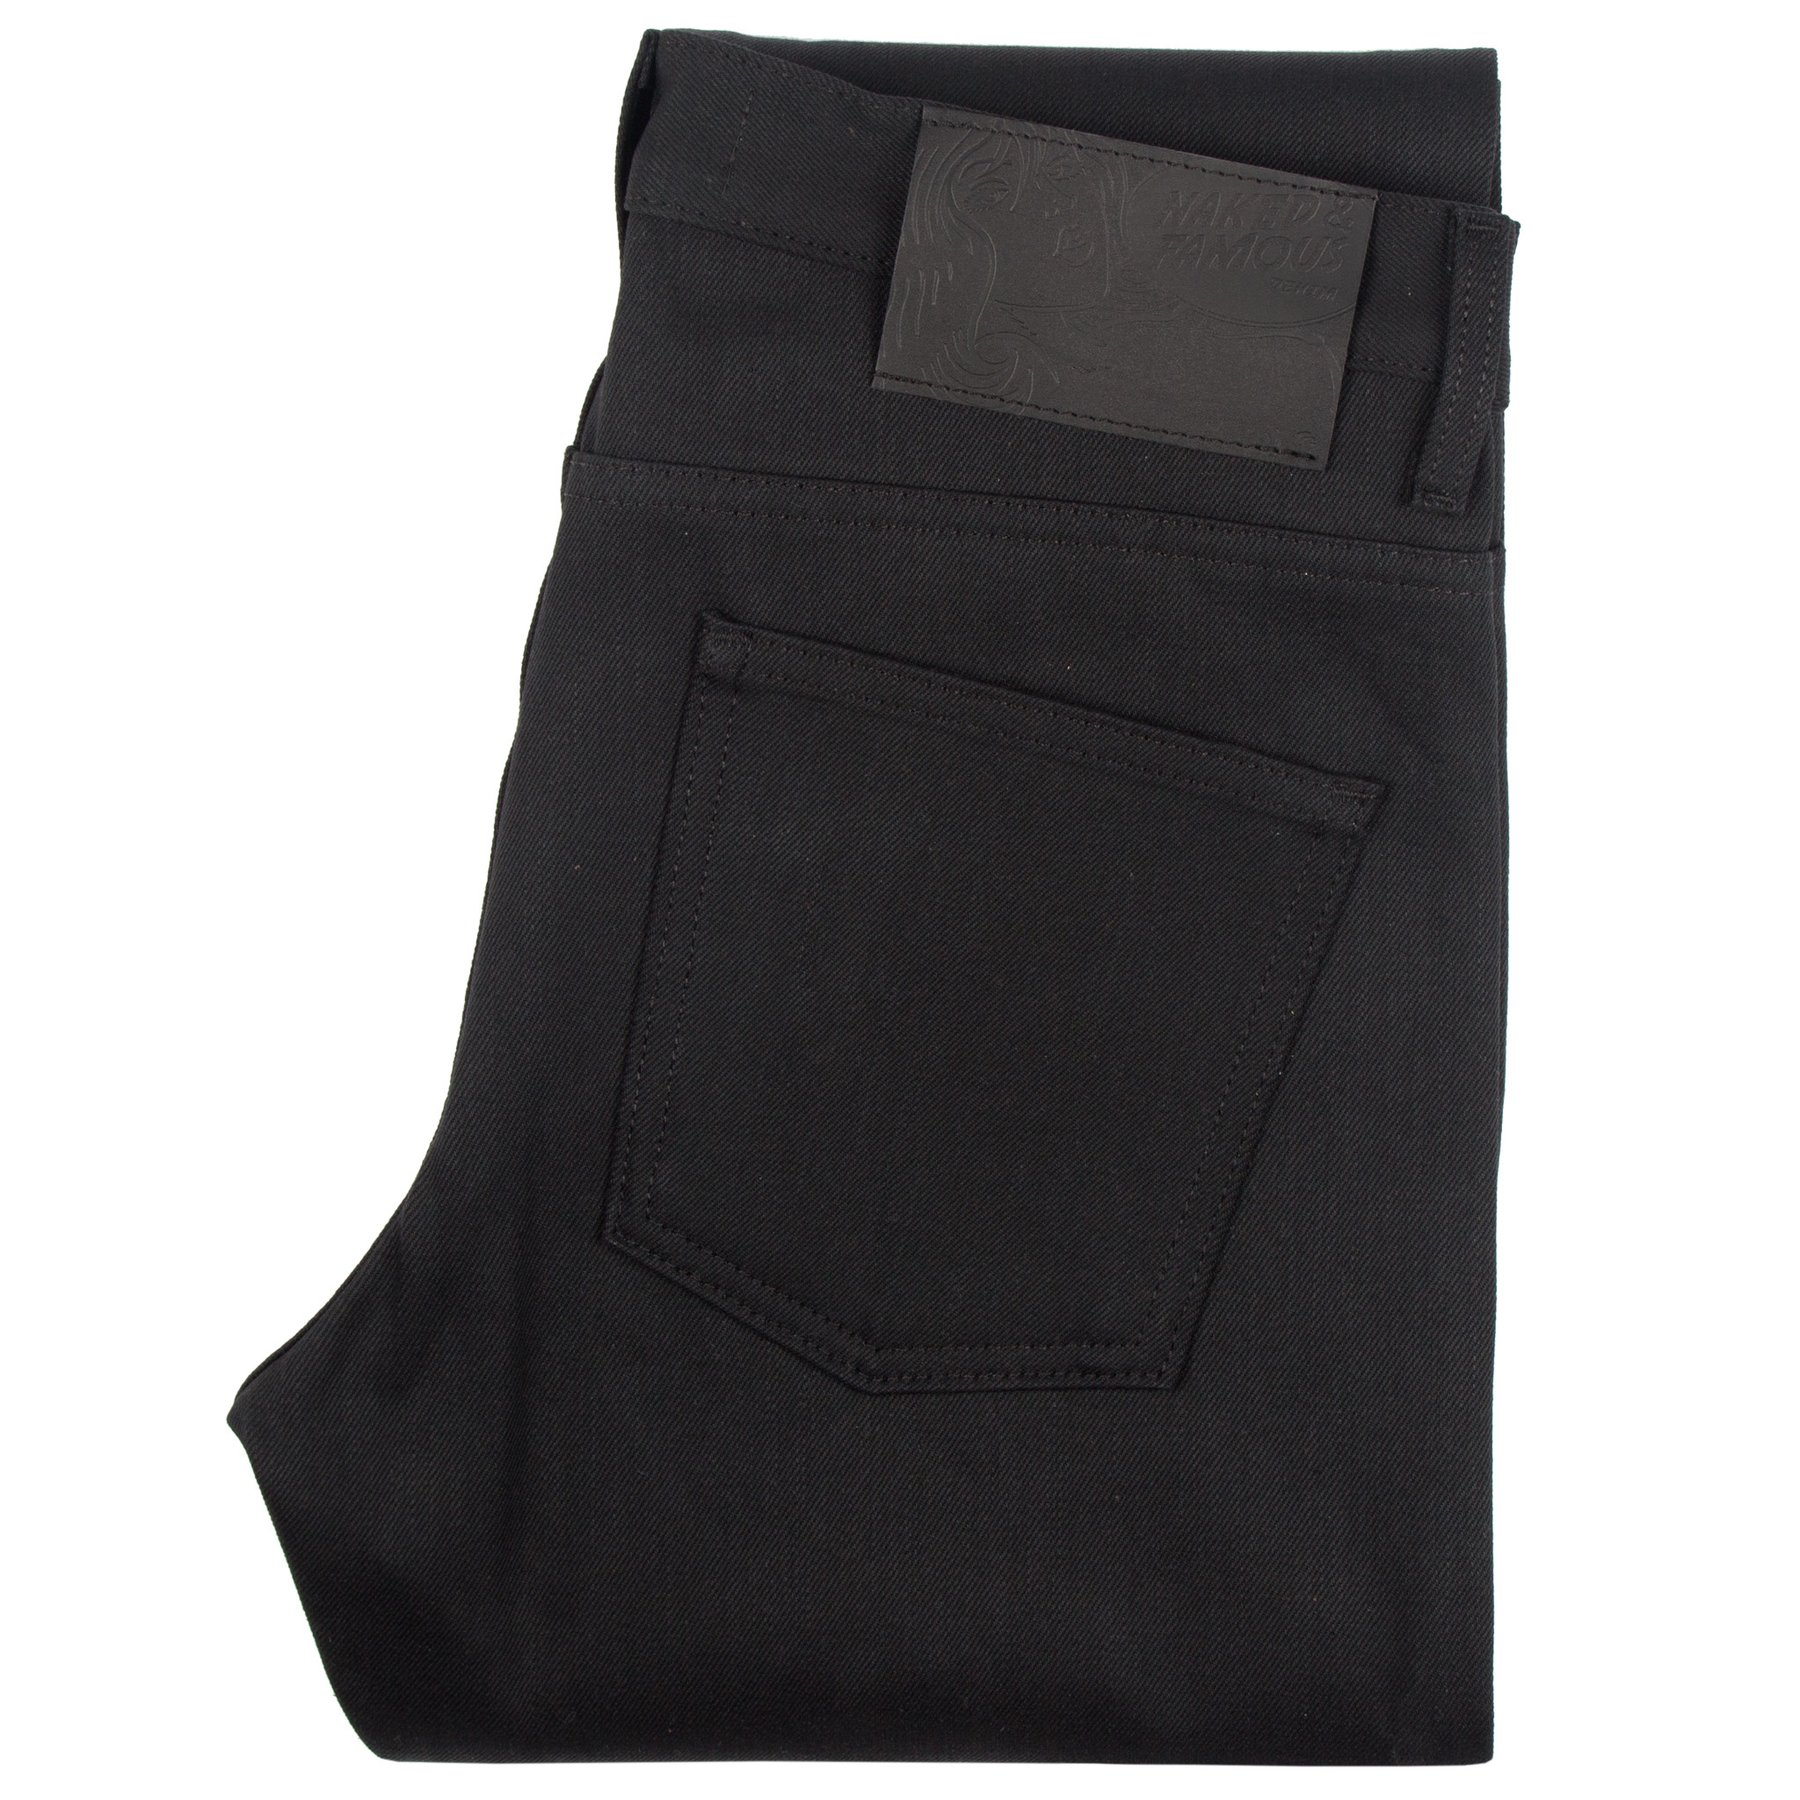  Solid Black Selvedge Jeans Folded 